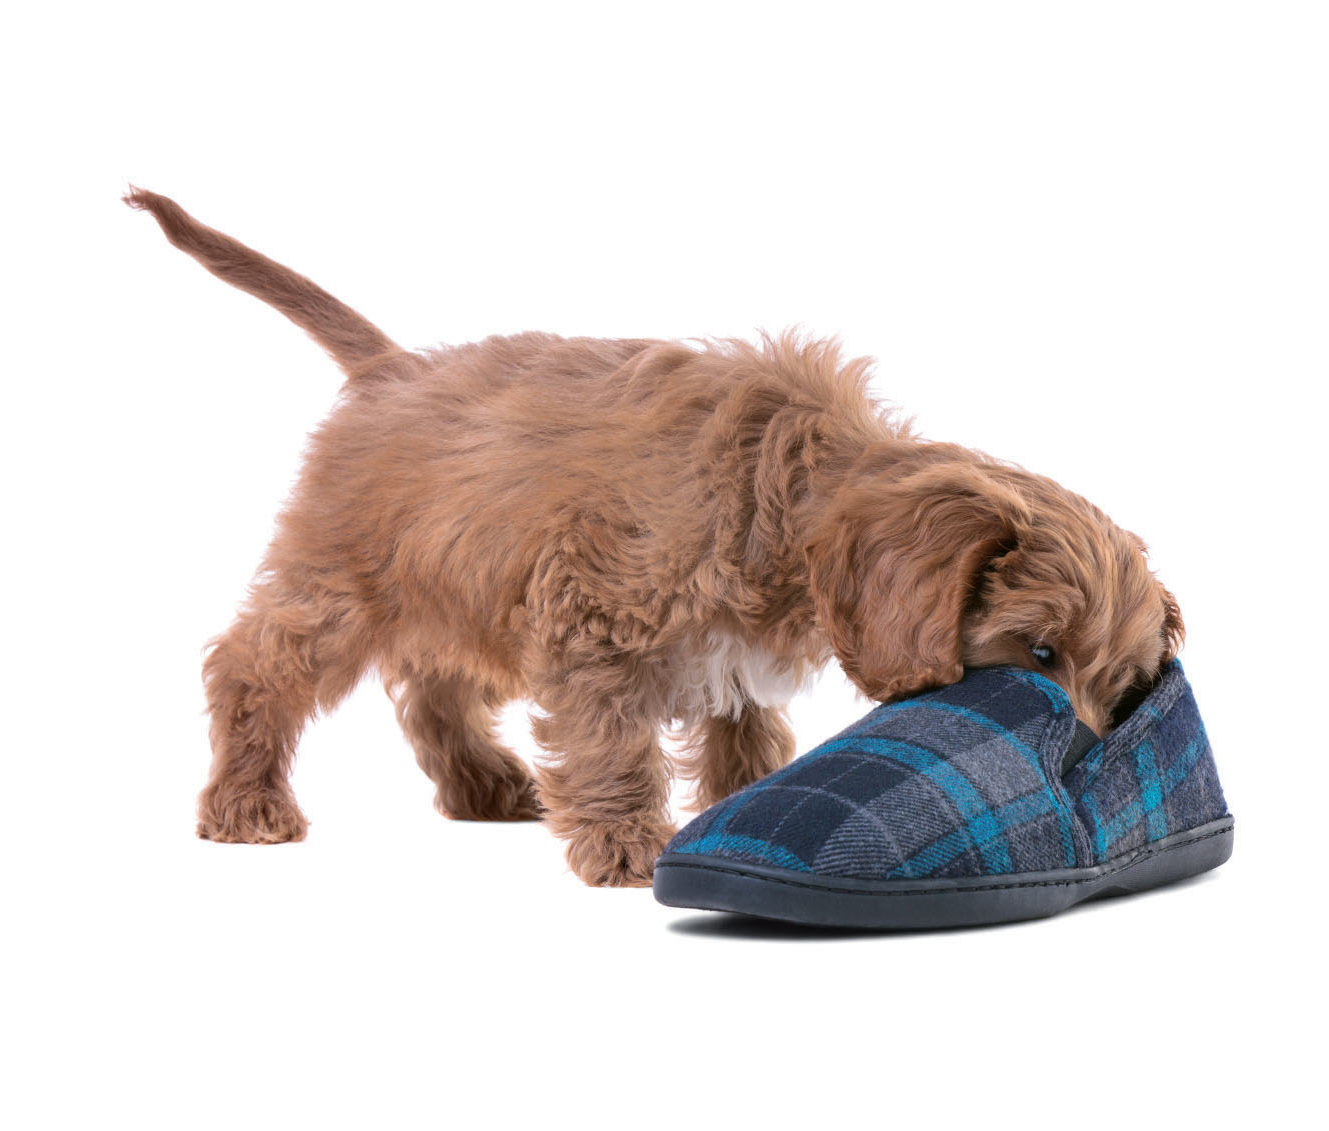 Puppy in slipper